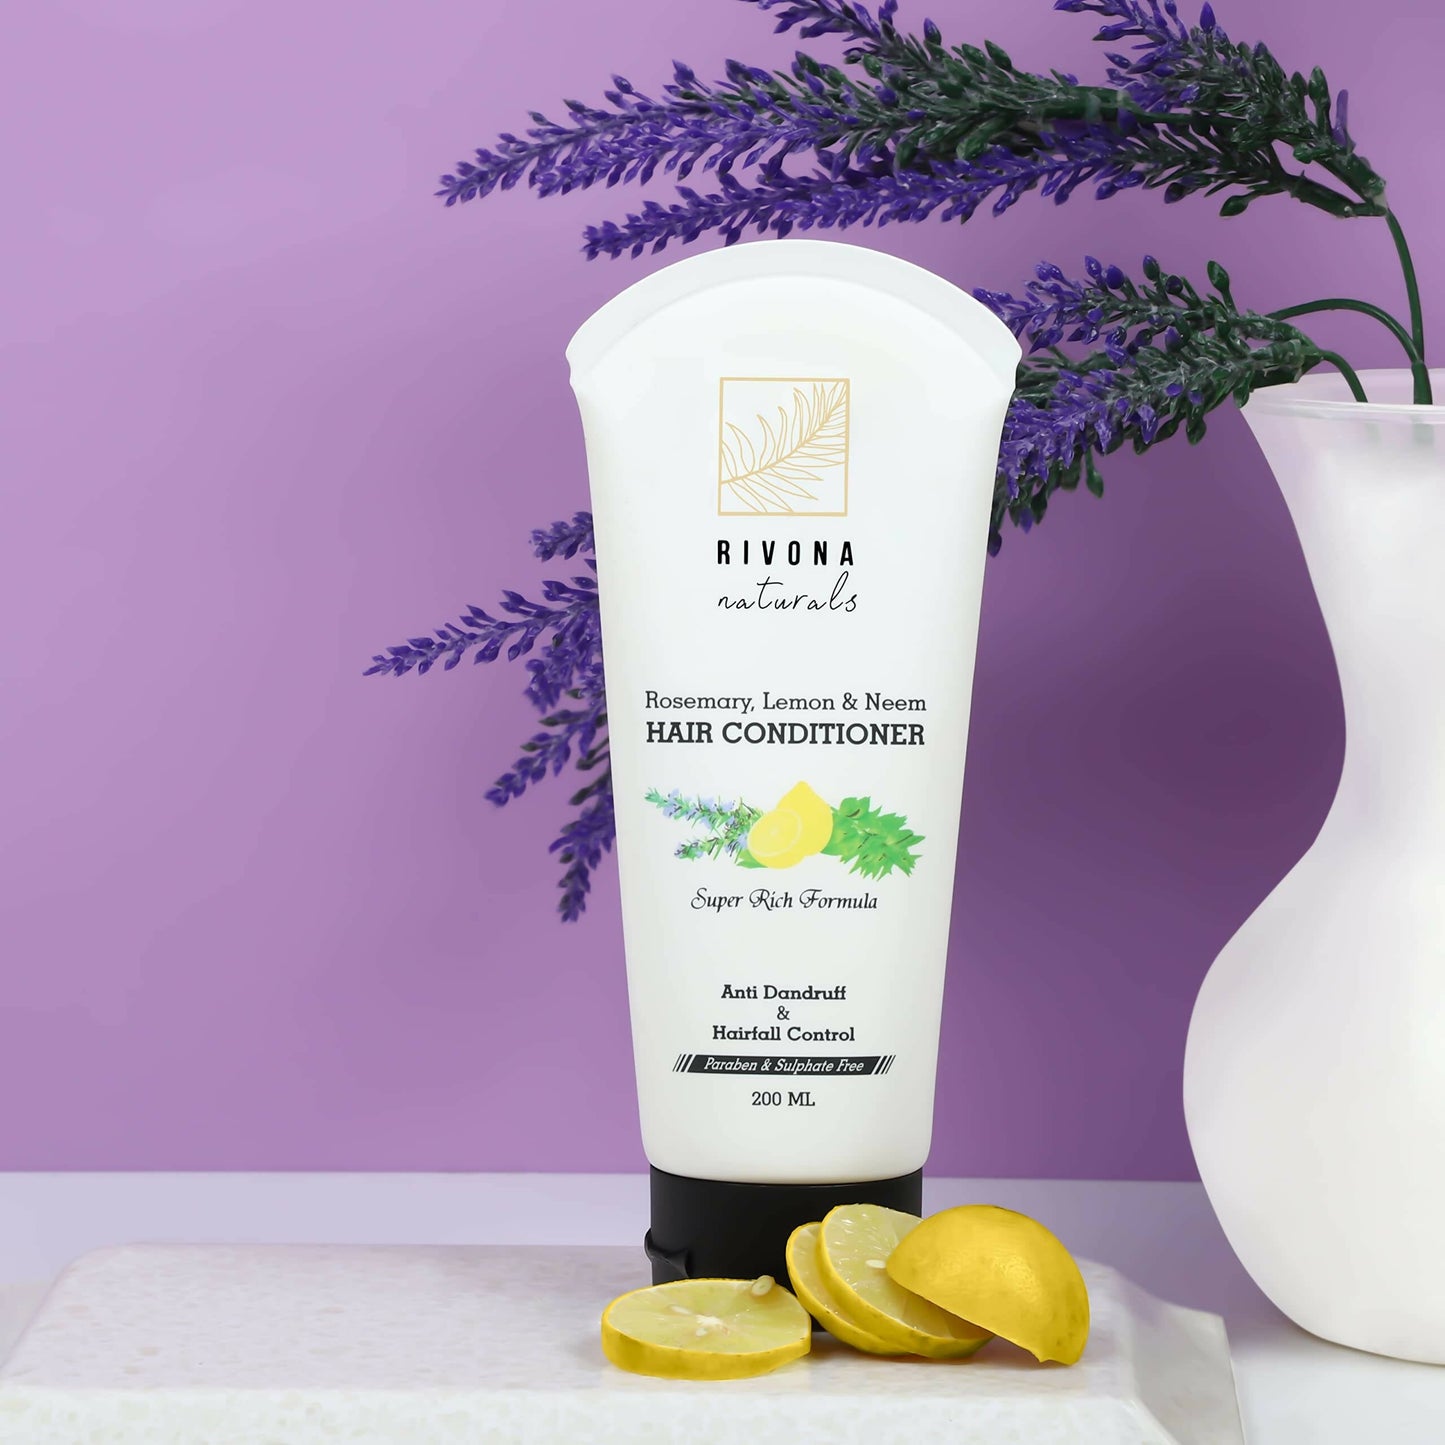 Rivona Naturals Rosemary, Lemon & Neem Hair Conditioner